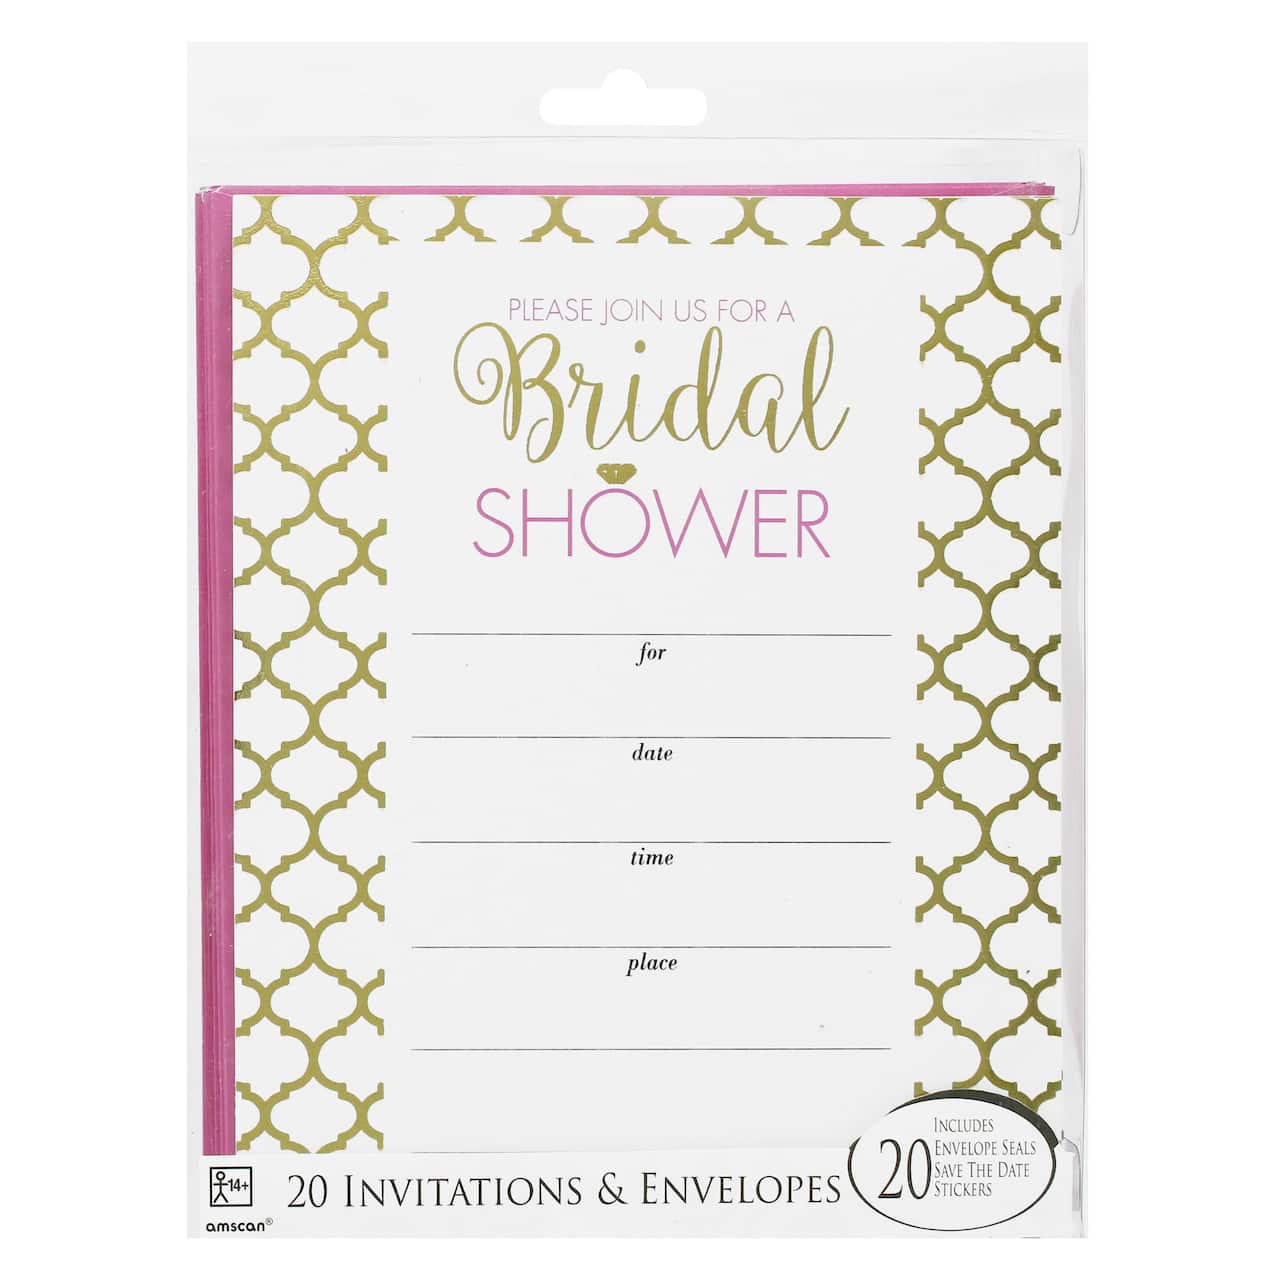 Bridal Shower Value Pack Invitation Kit